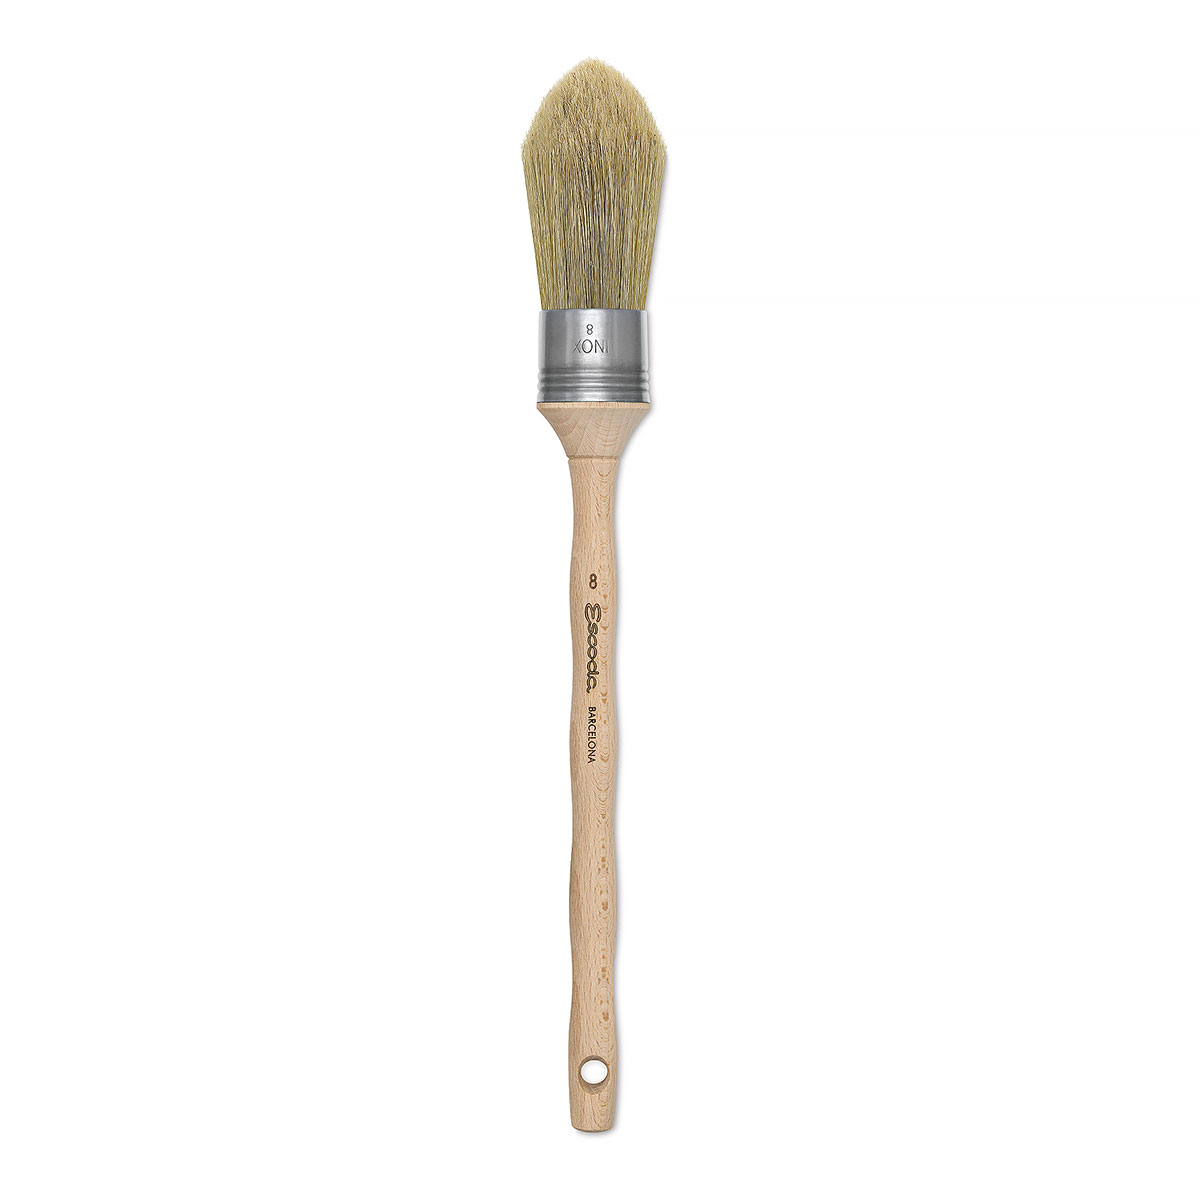 Lakeshore Natural-Bristle Paintbrushes - Set of 10